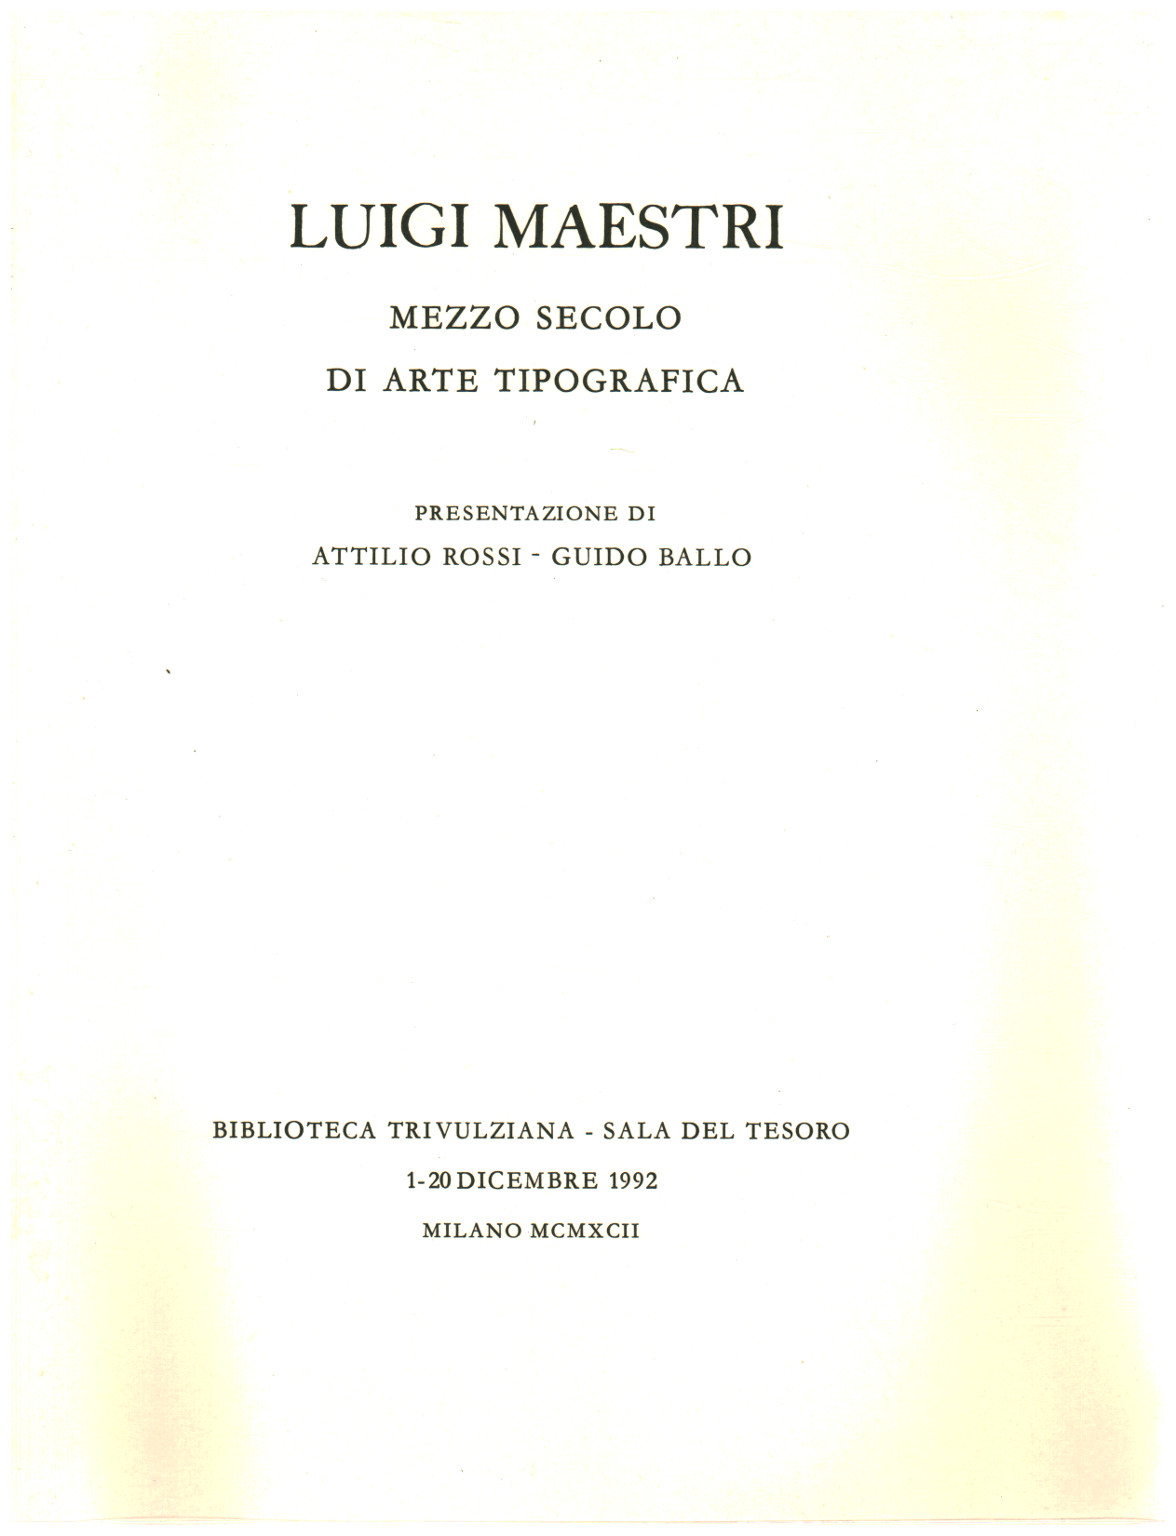 Luigi Maestri, s.a.